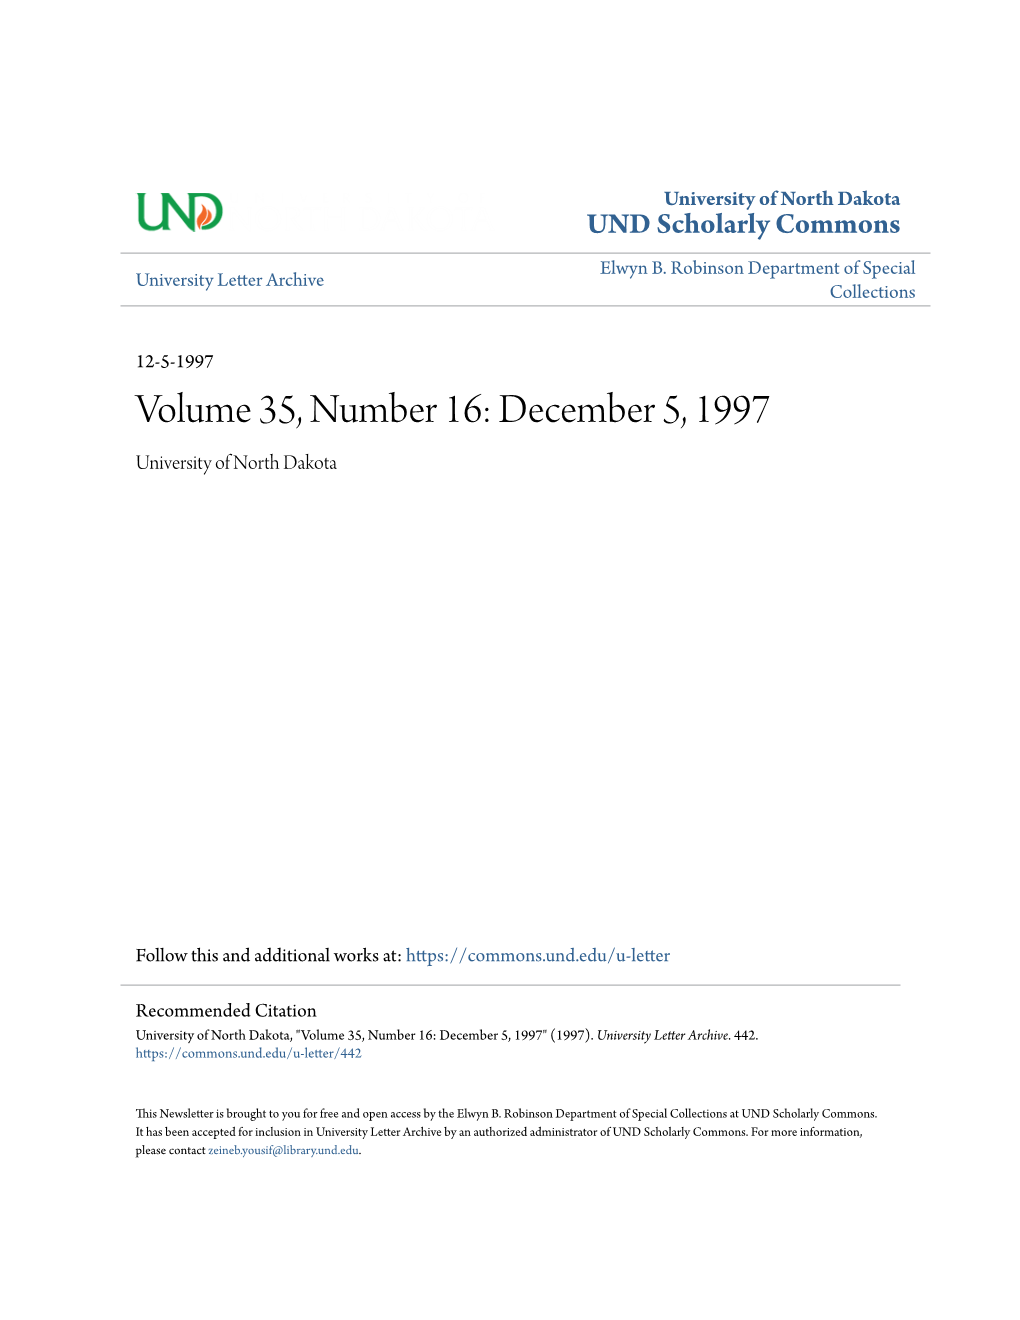 Volume 35, Number 16: December 5, 1997 University of North Dakota